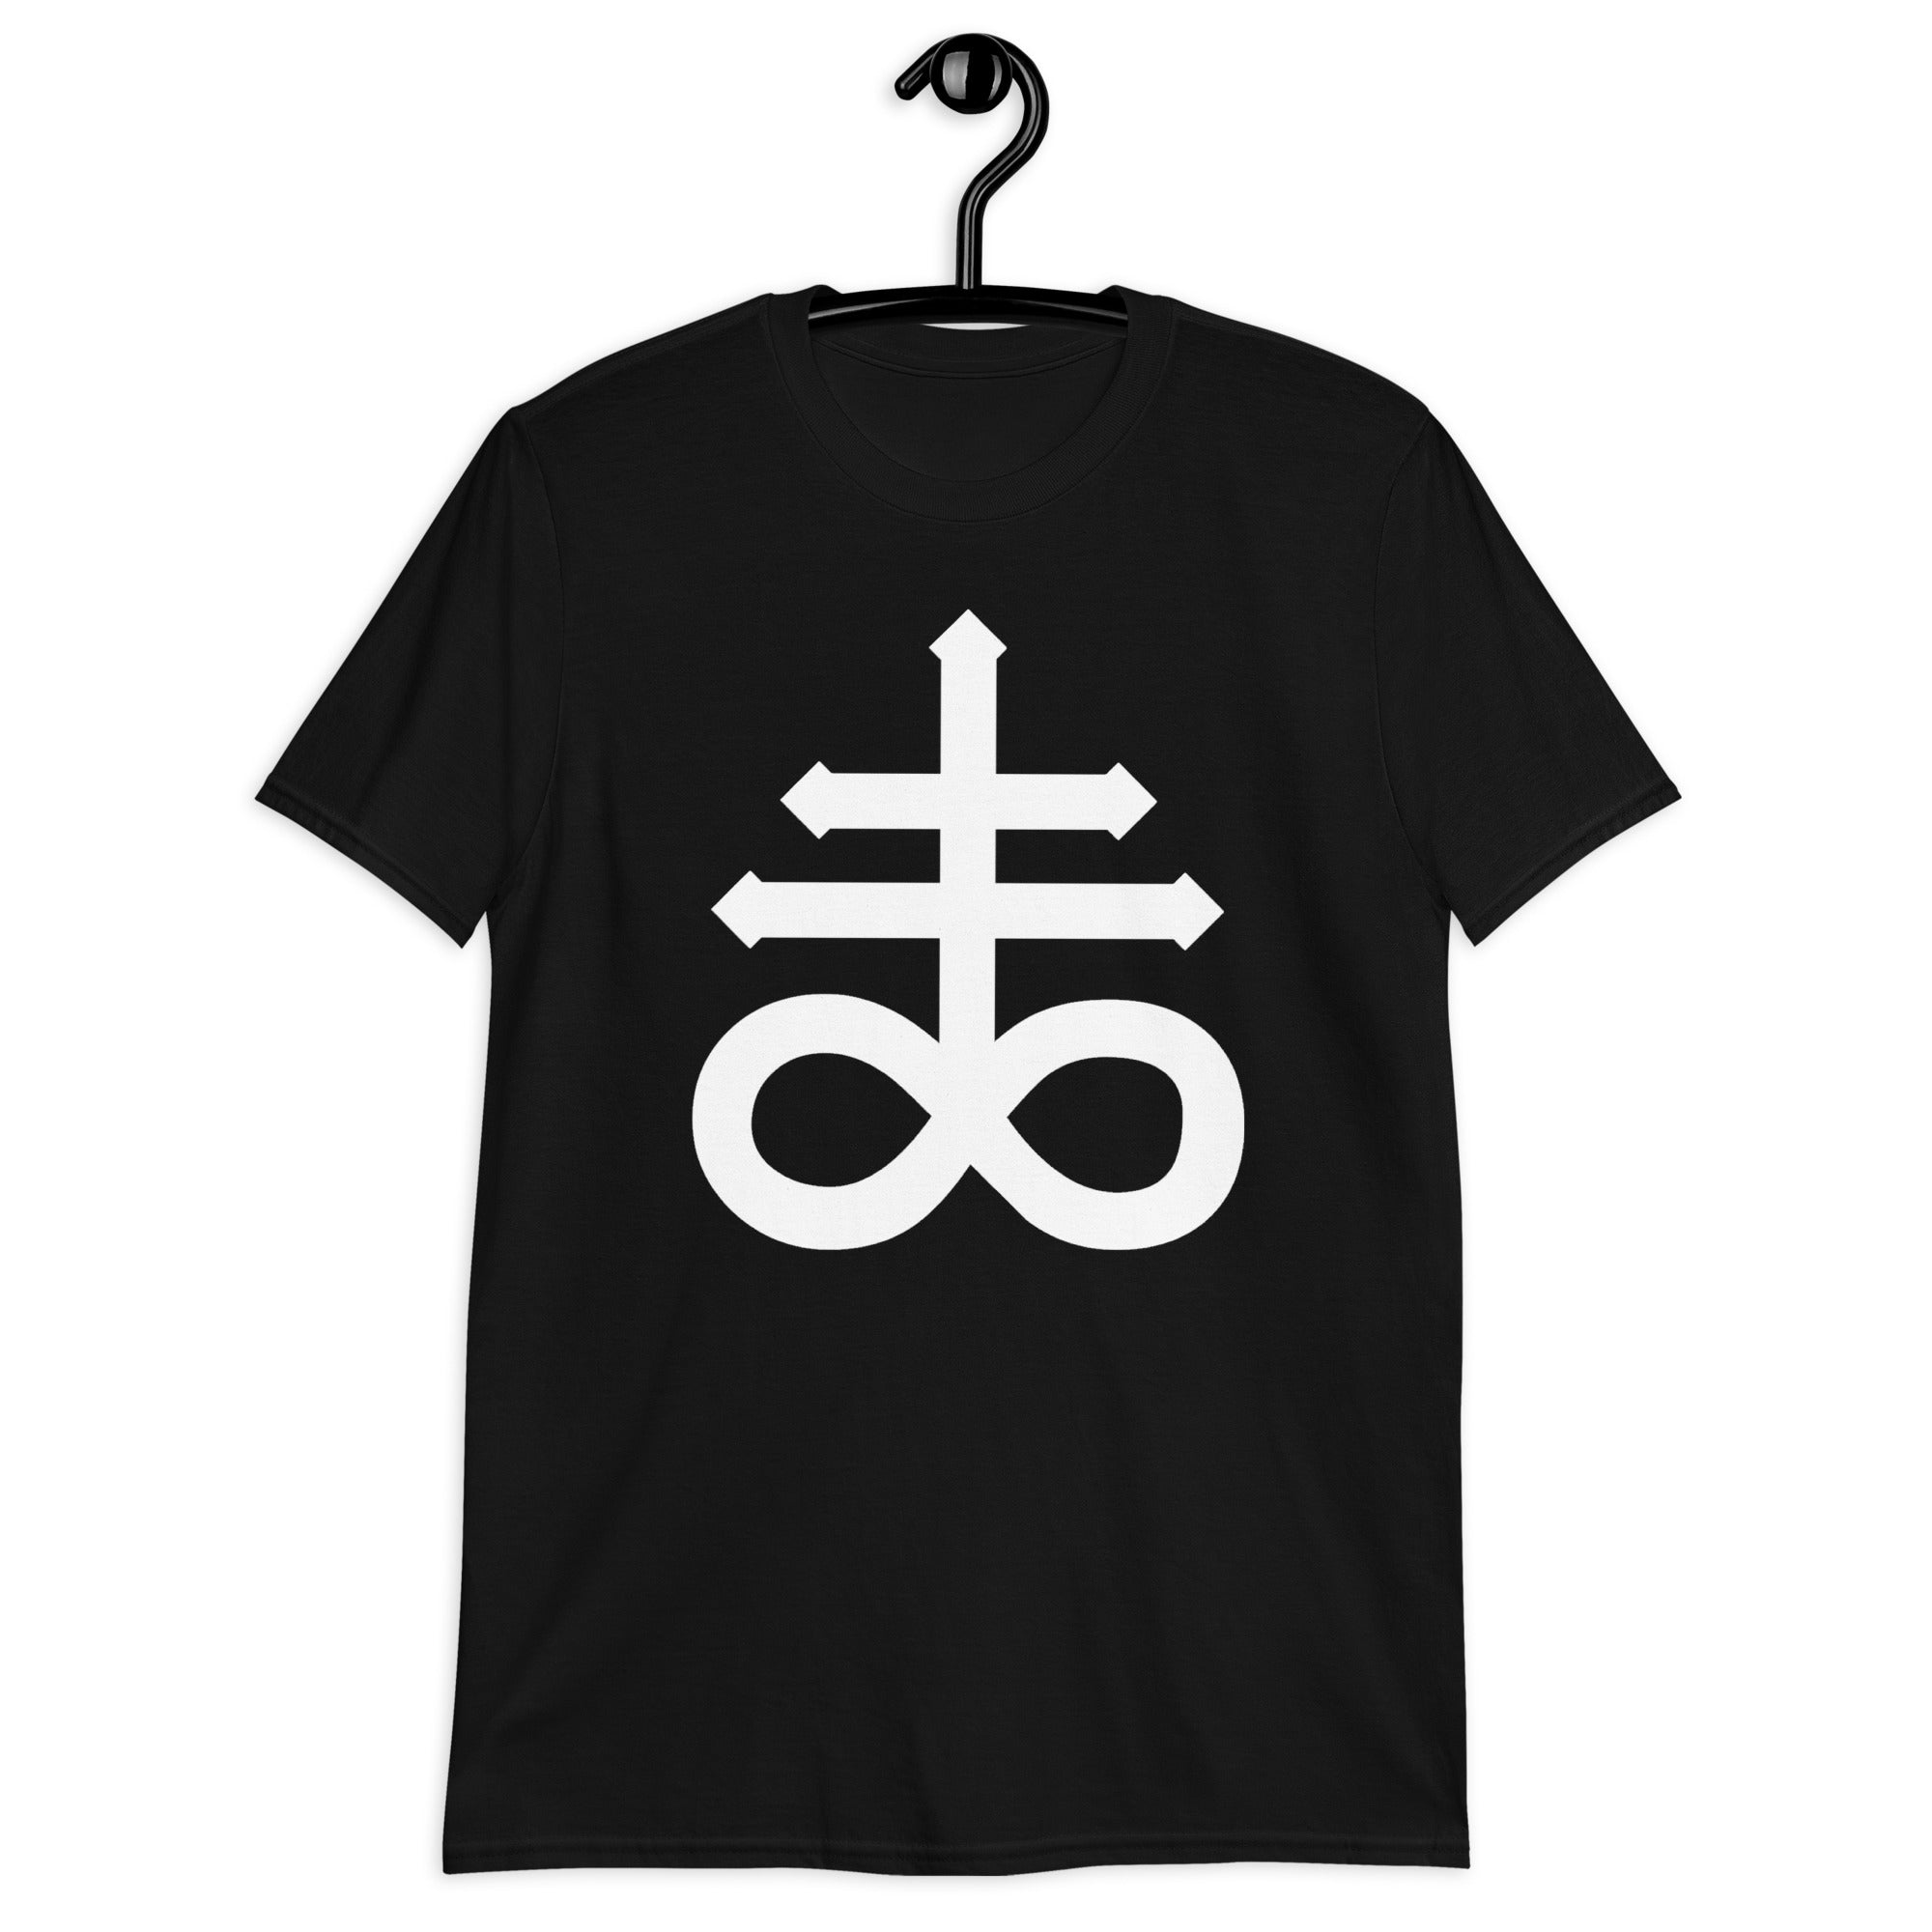 The Leviathan Cross of Satan Occult Symbol Men's Short Sleeve T-Shirt White Print - Edge of Life Designs